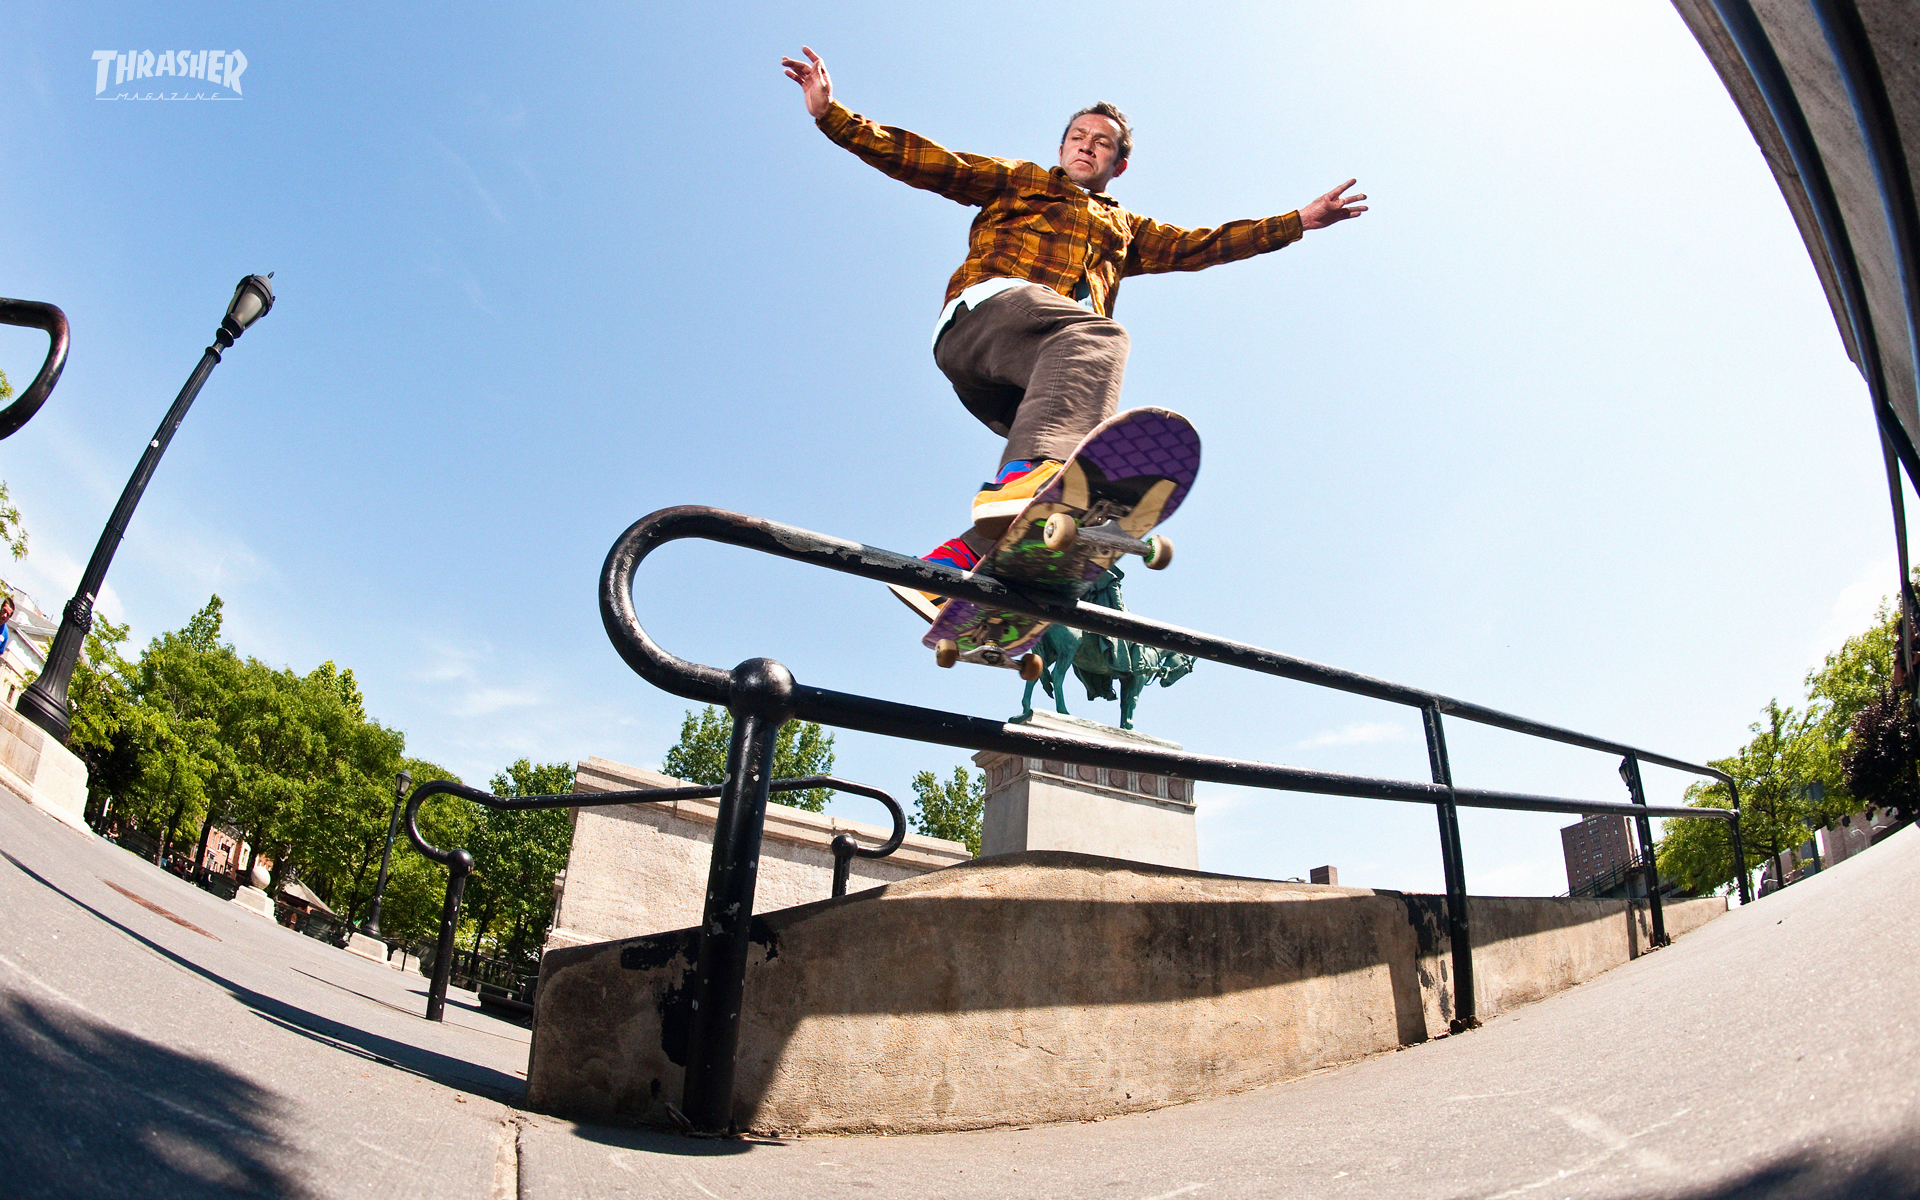 thrasher magazine wallpaper,skateboarding,boardsport,skateboarder,skateboard,kickflip